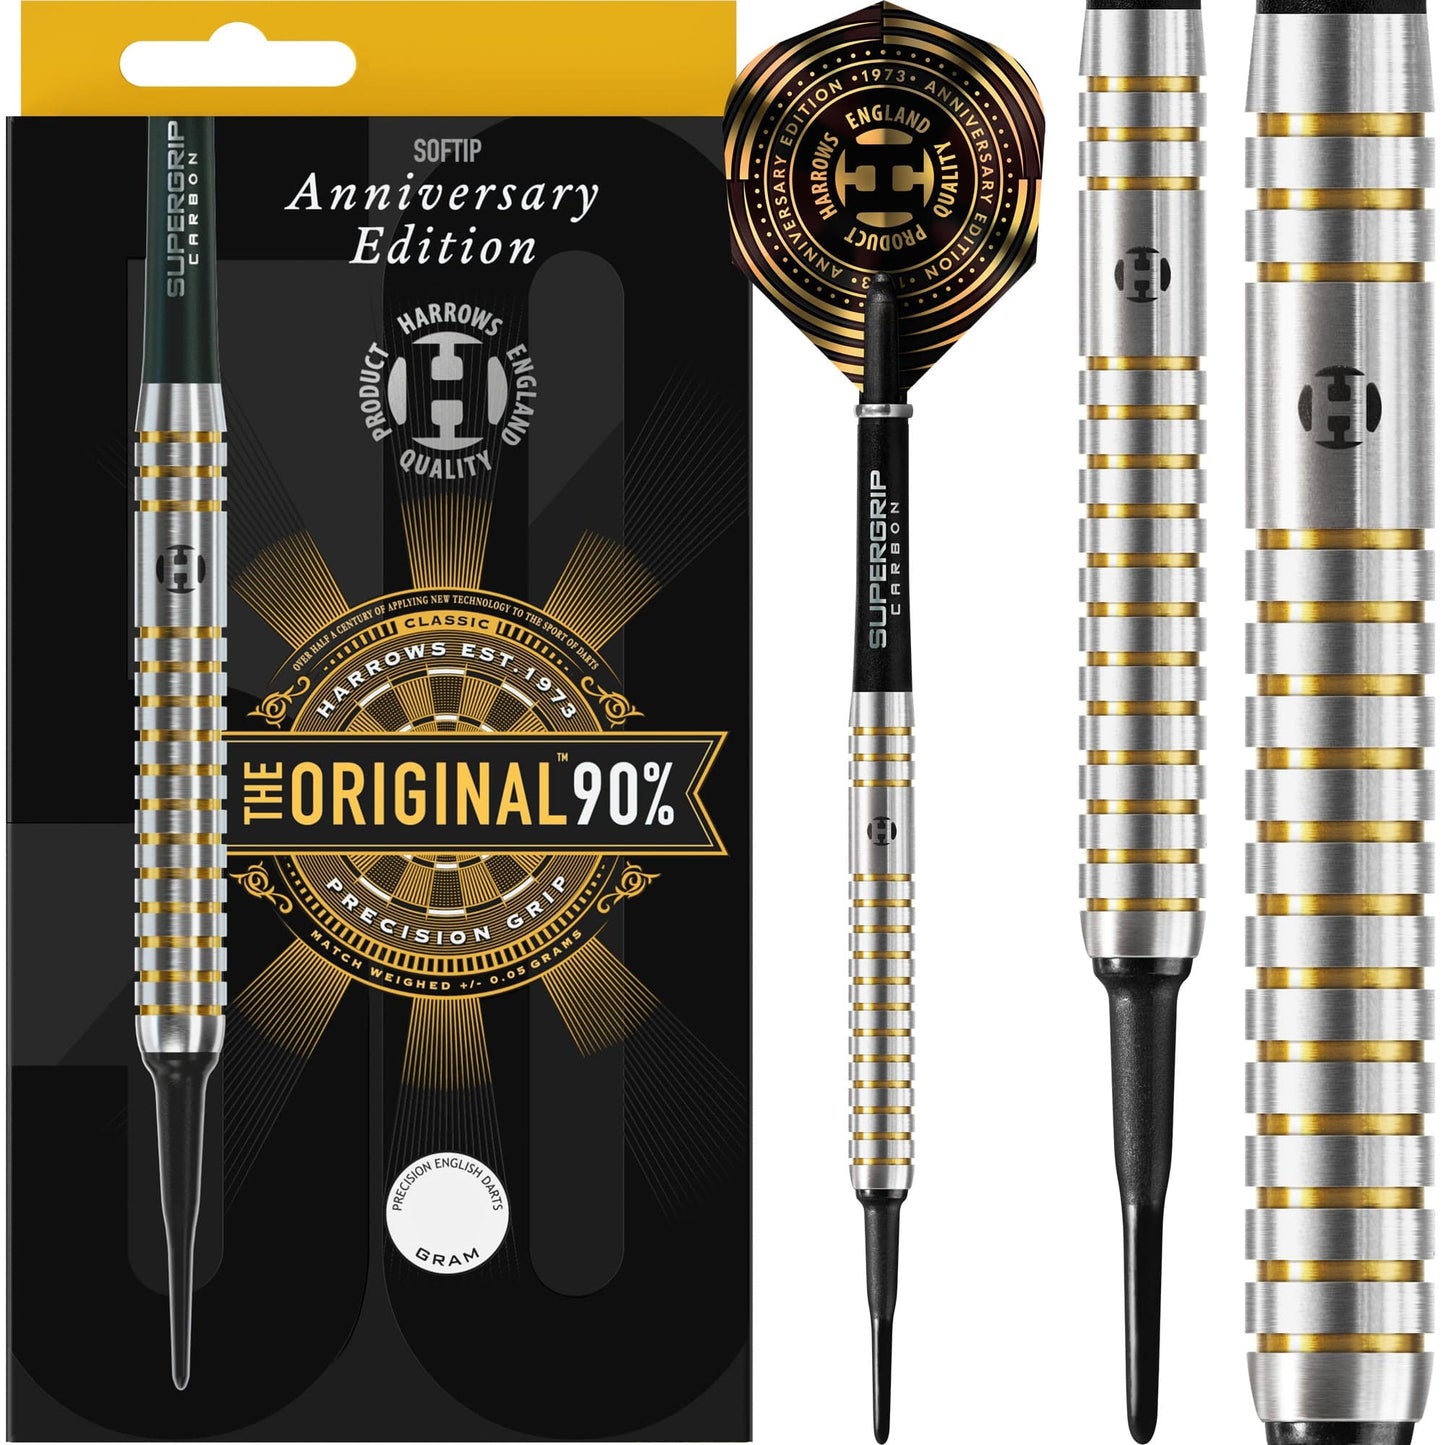 Harrows The Original Darts - Soft Tip - 90% - Anniversary Edition - Gold Titanium 18g